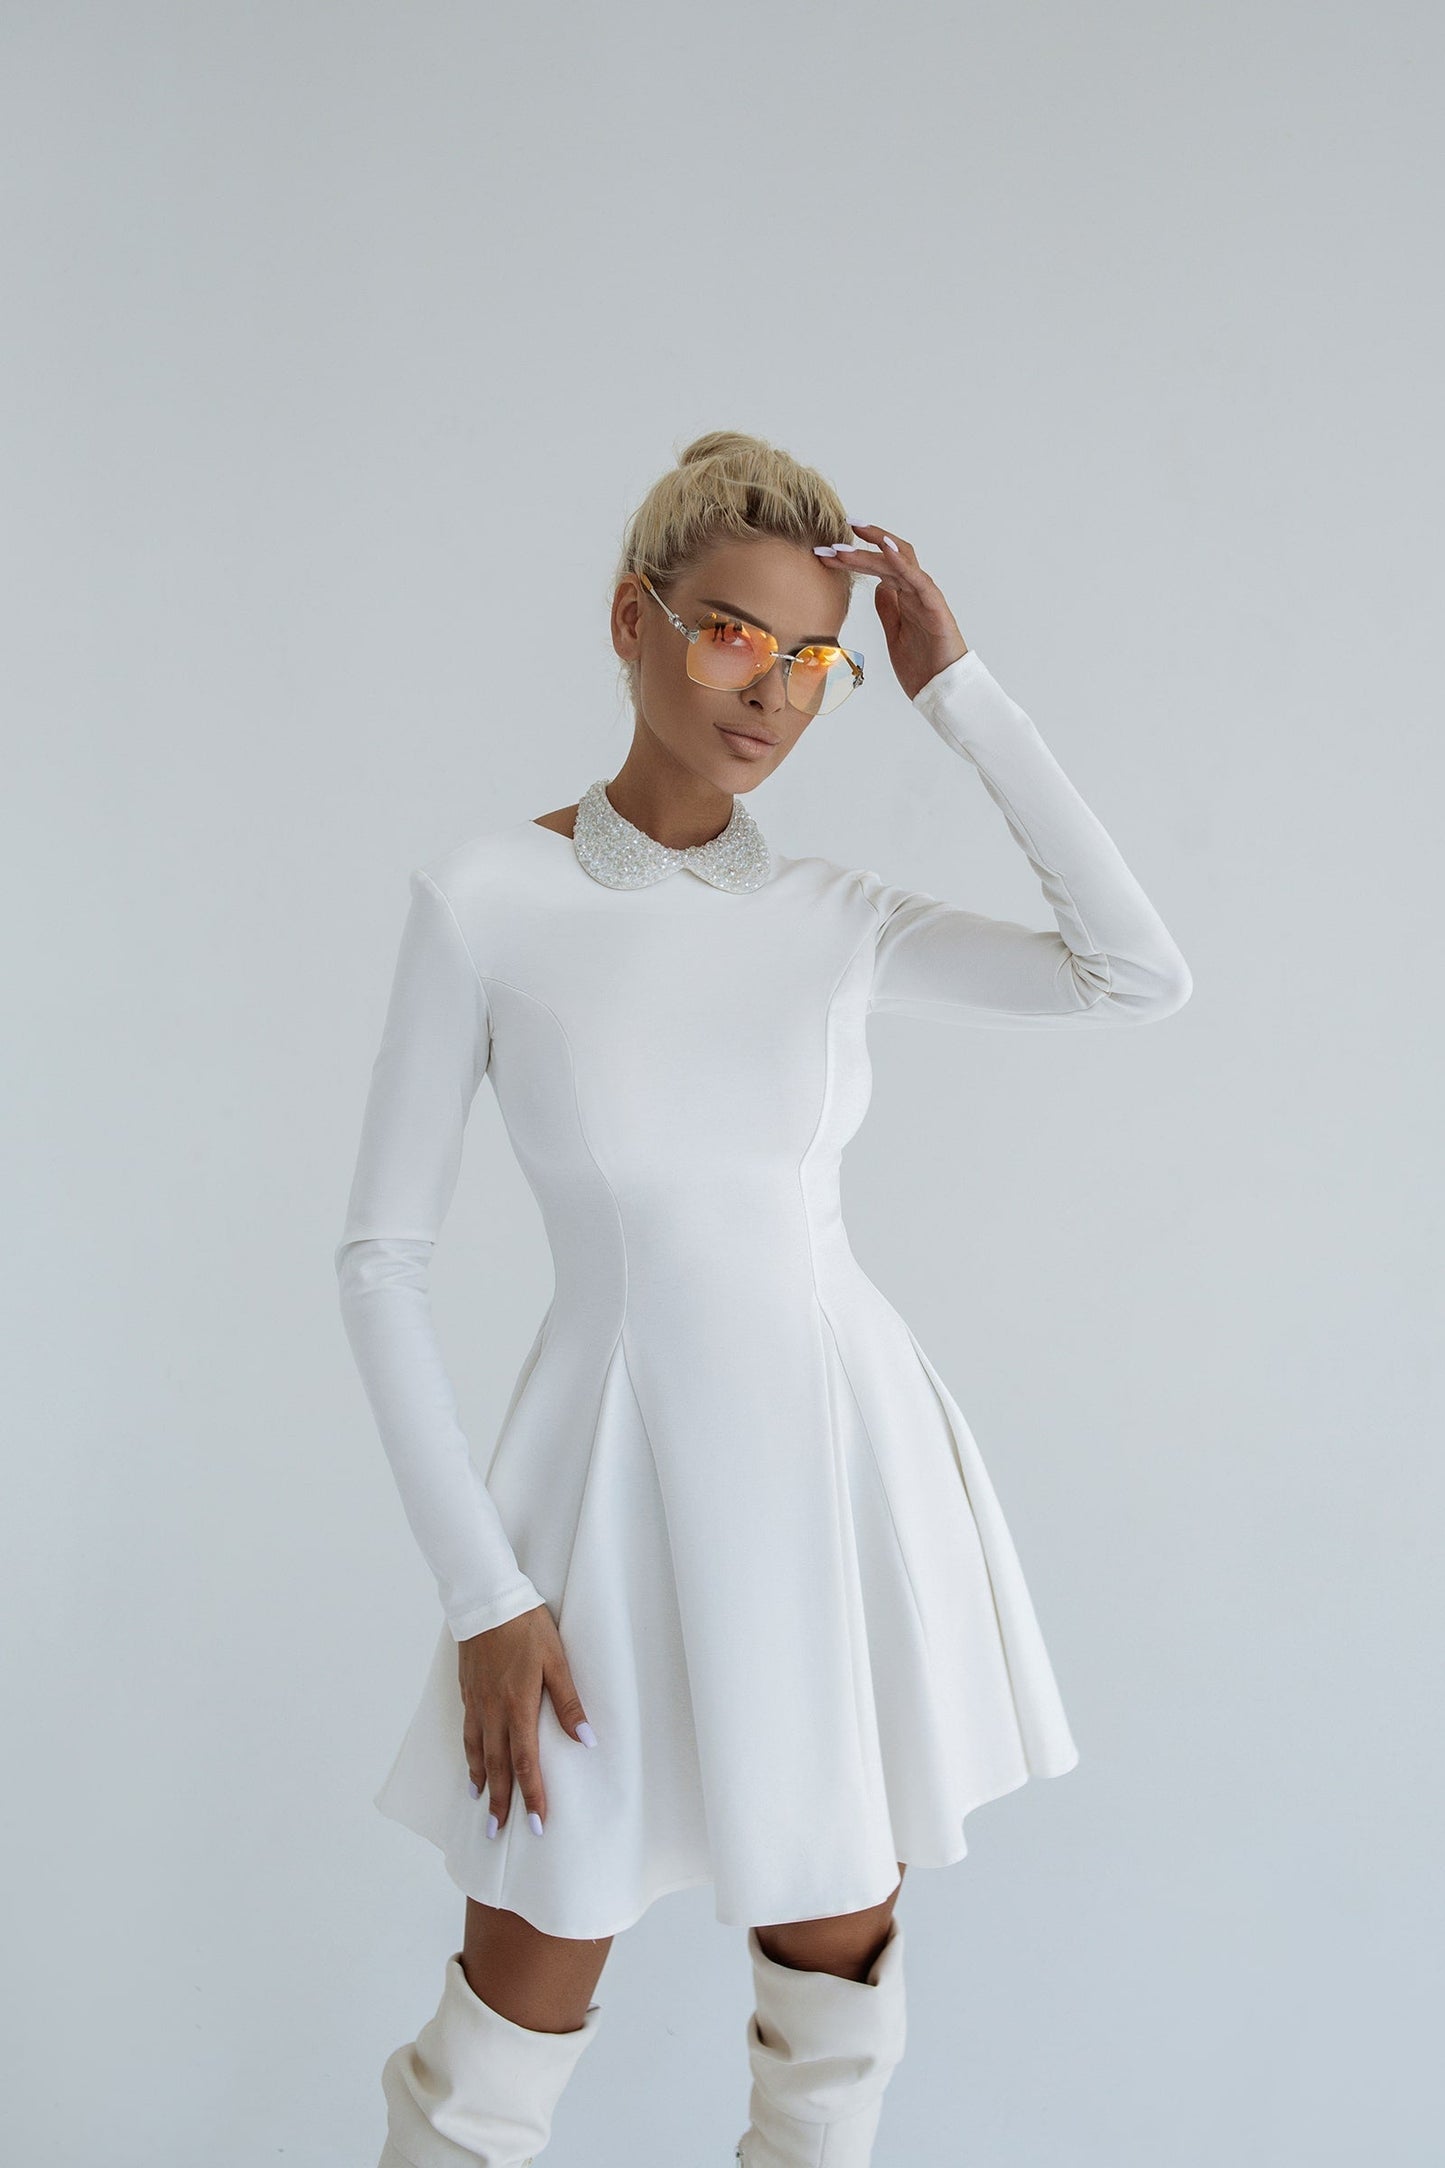 Knitted Fabric Dress Mini A-line Long Sleeve